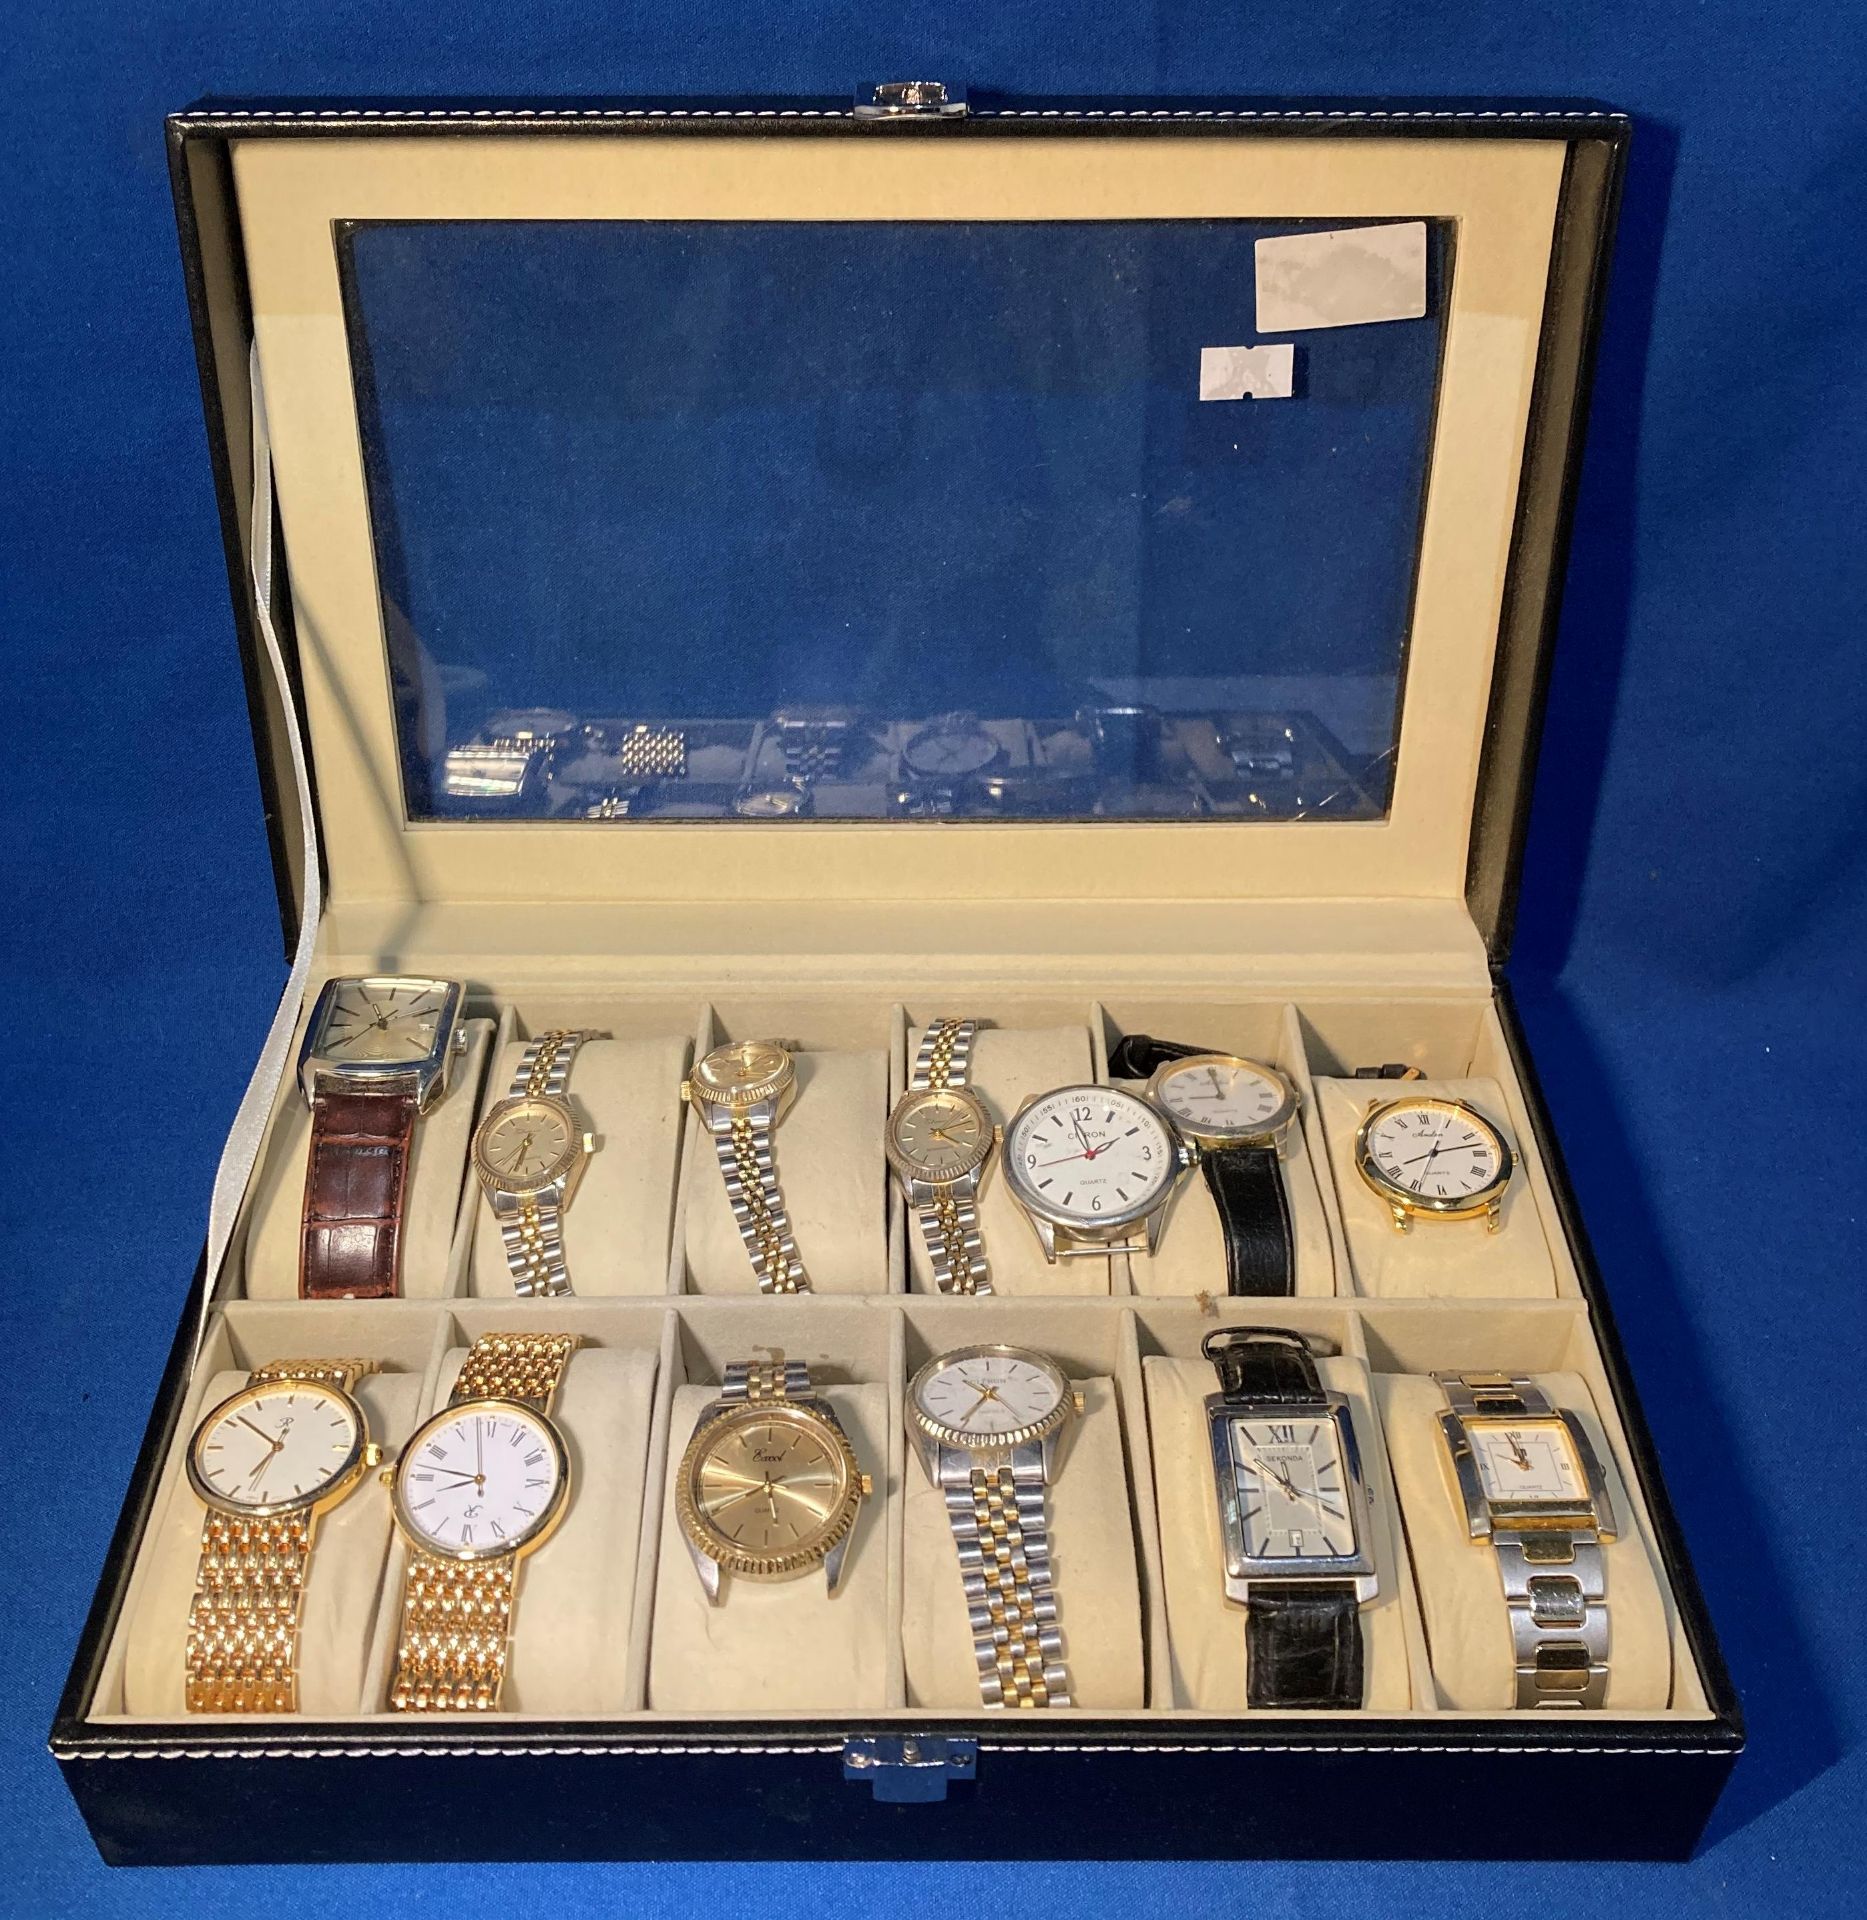 Black vinyl twelve-slot watch case and twelve ladies and gents watches including Sekonda, Citron,